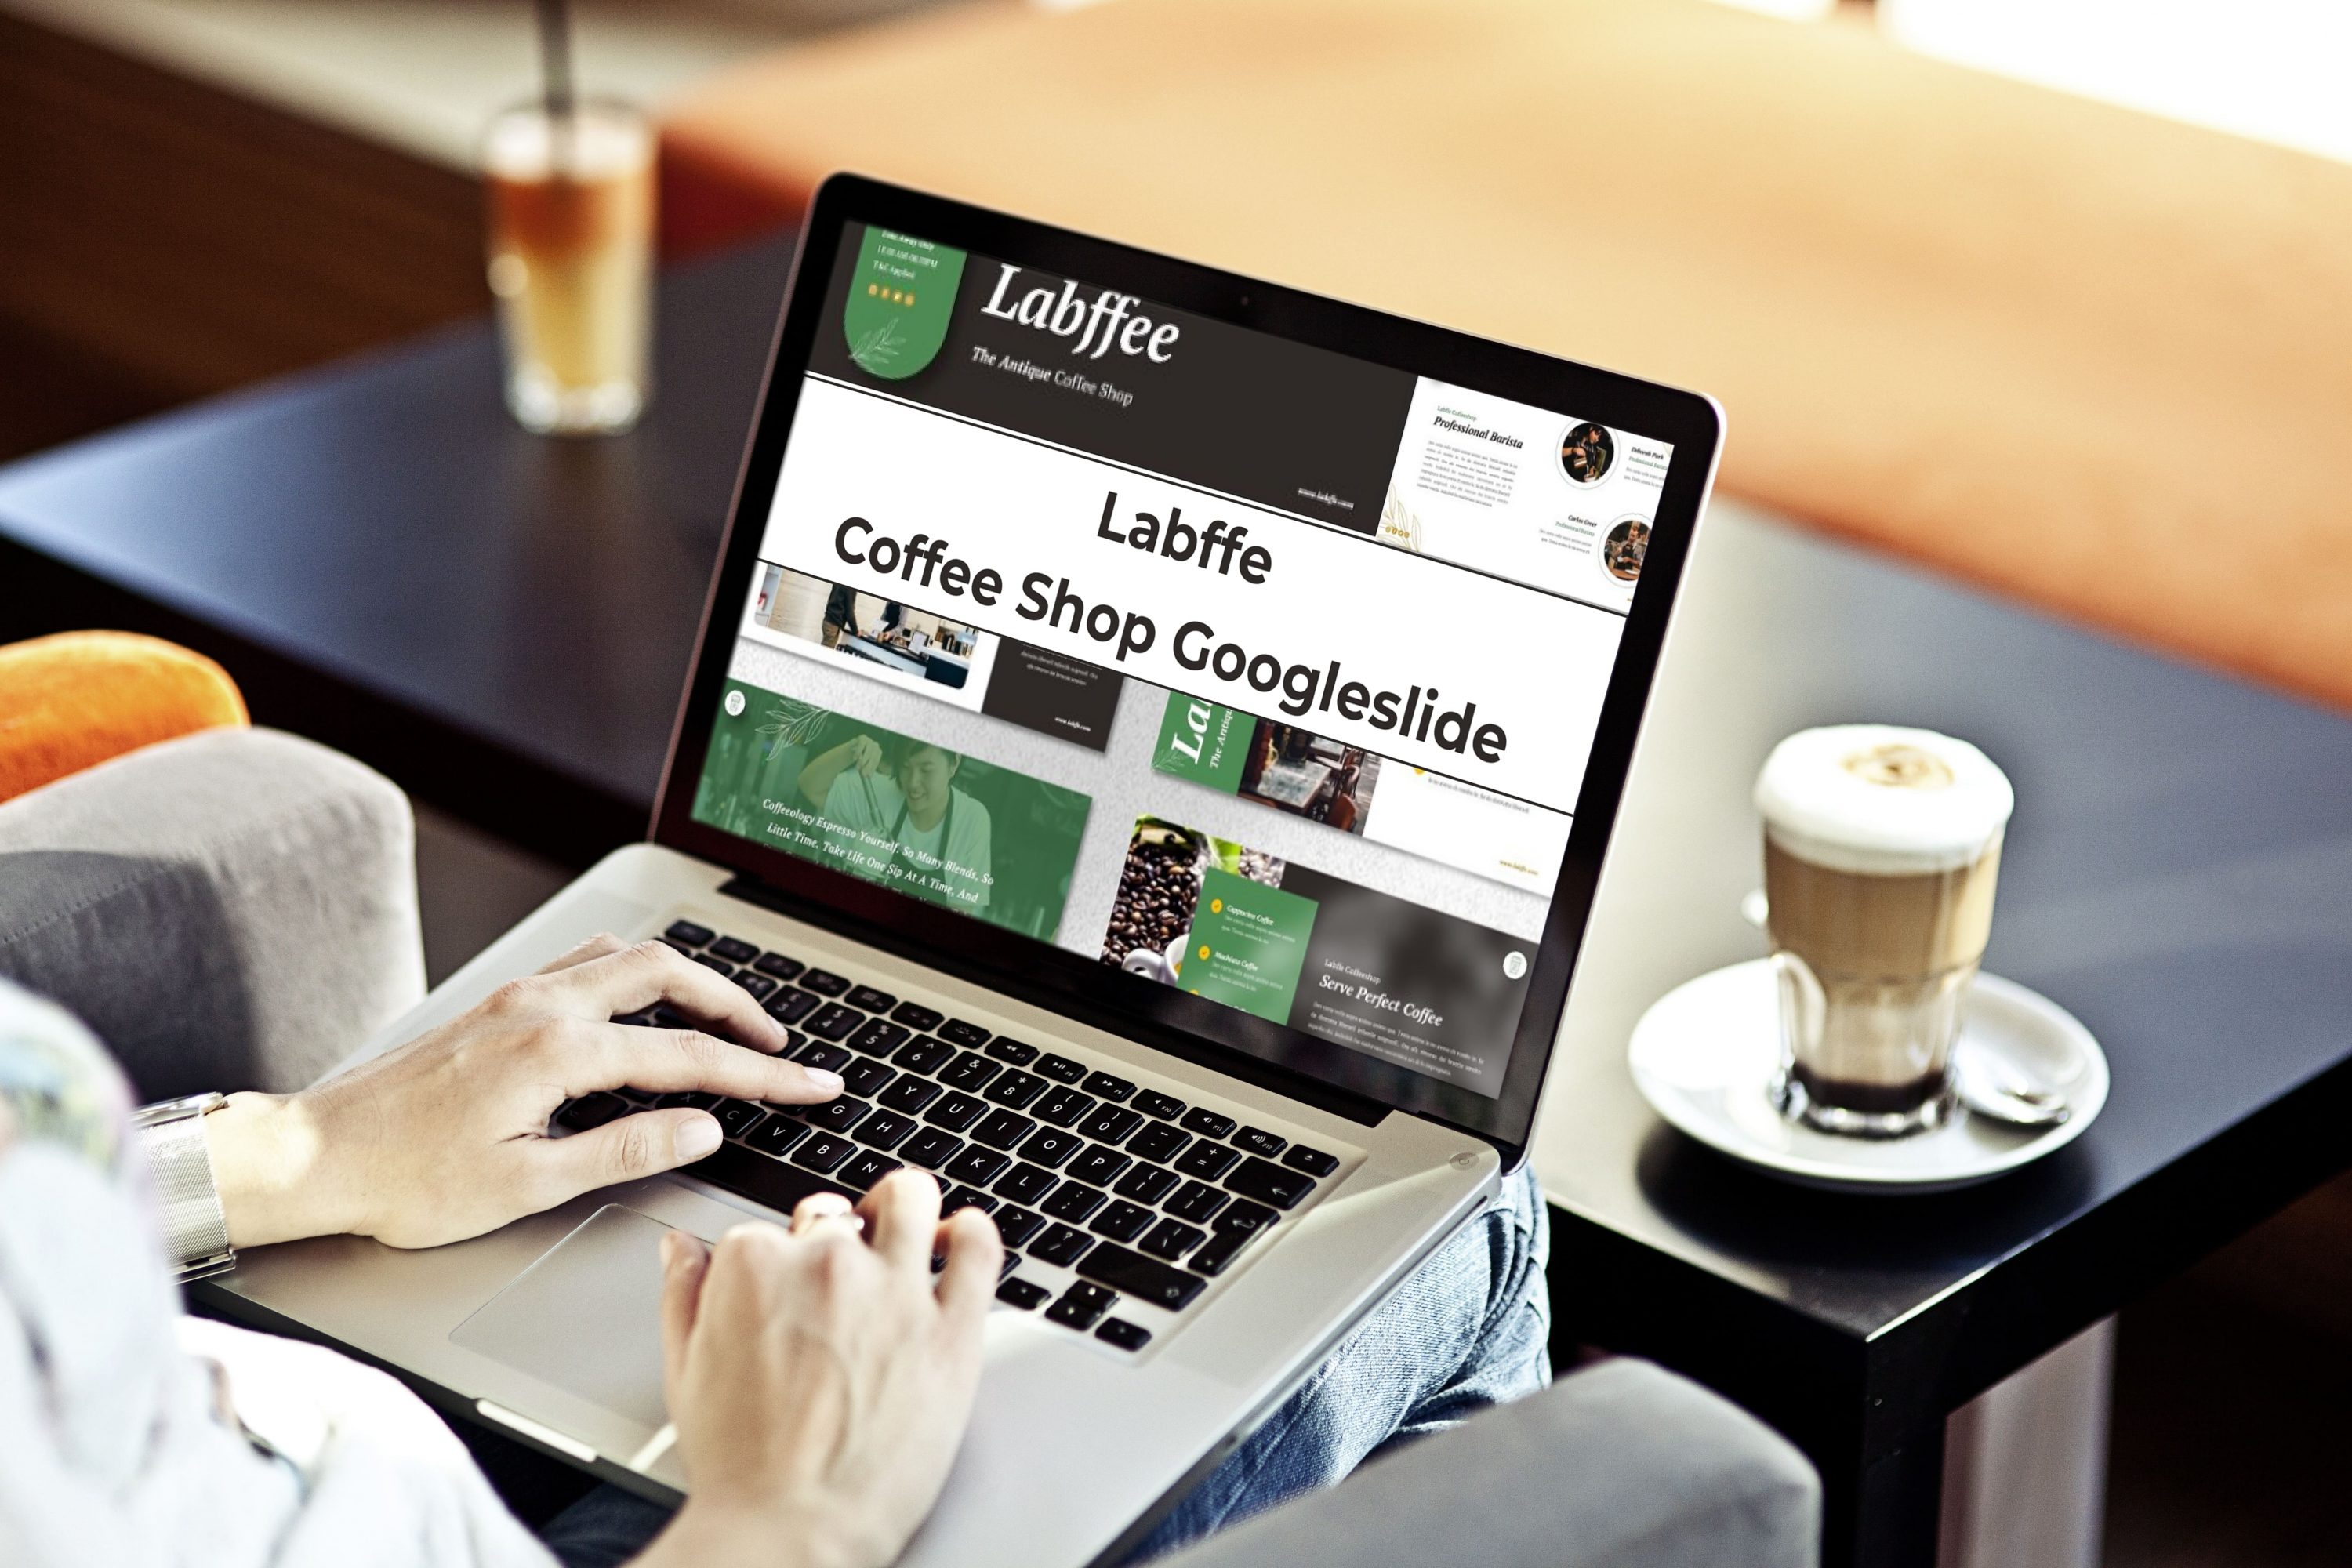 Laptop option of the Labffe - Coffee Shop Googleslide.